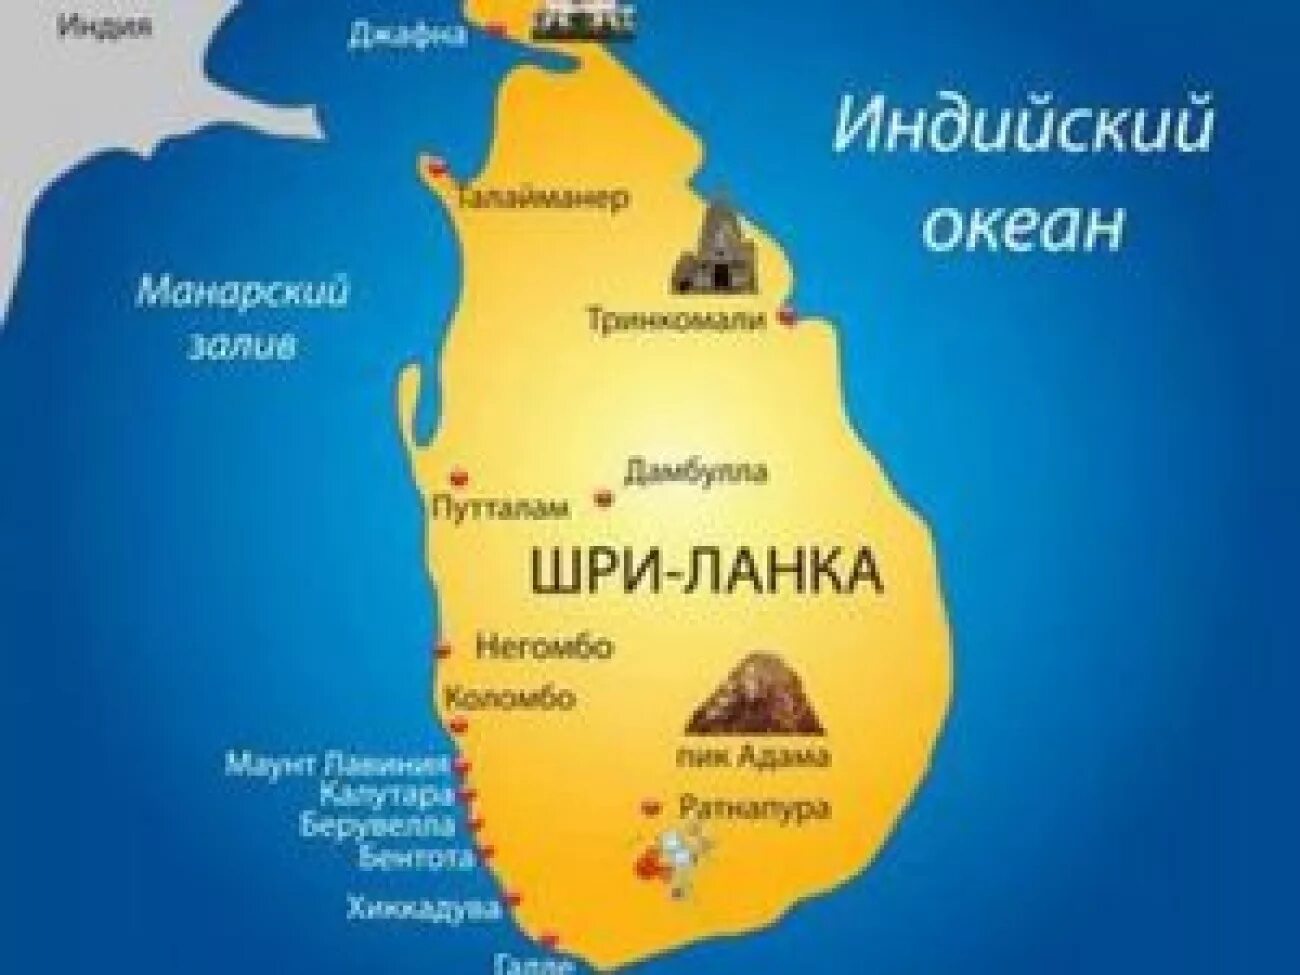 Шри Ланка на карте. Карта Шри Ланки. Остров Цейлон на карте. Карта Шри Ланки с курортами на русском языке. Карта достопримечательности шри